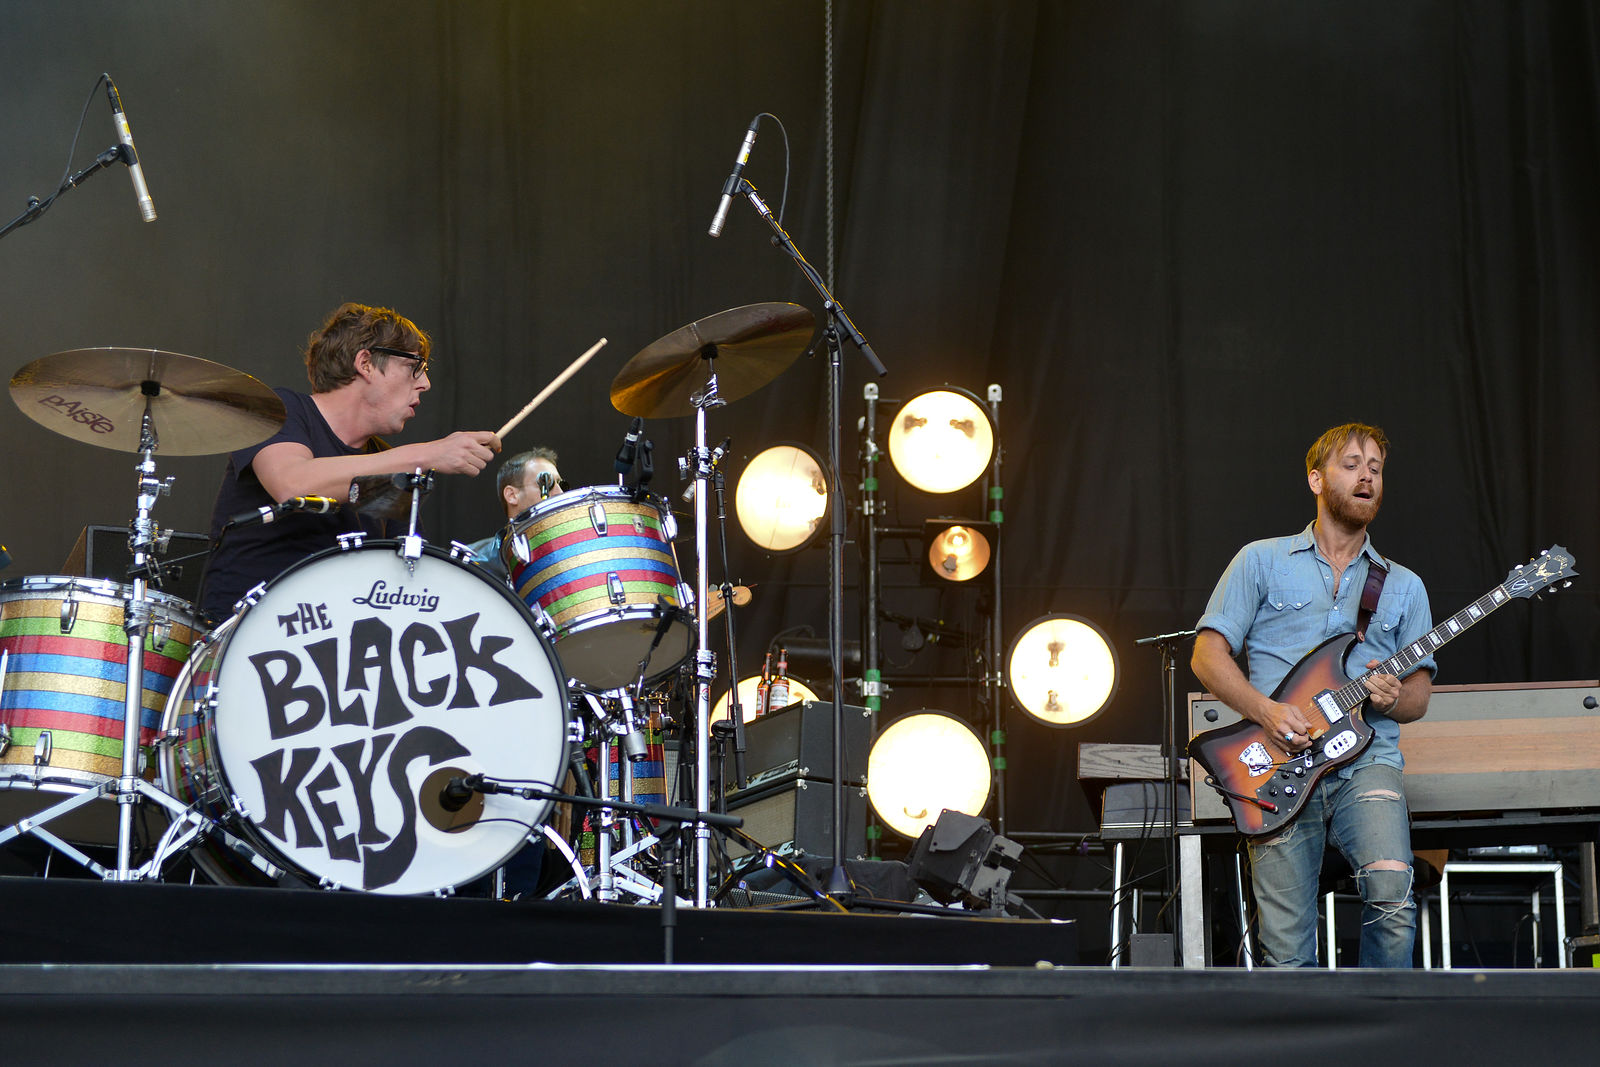 The Black Keys